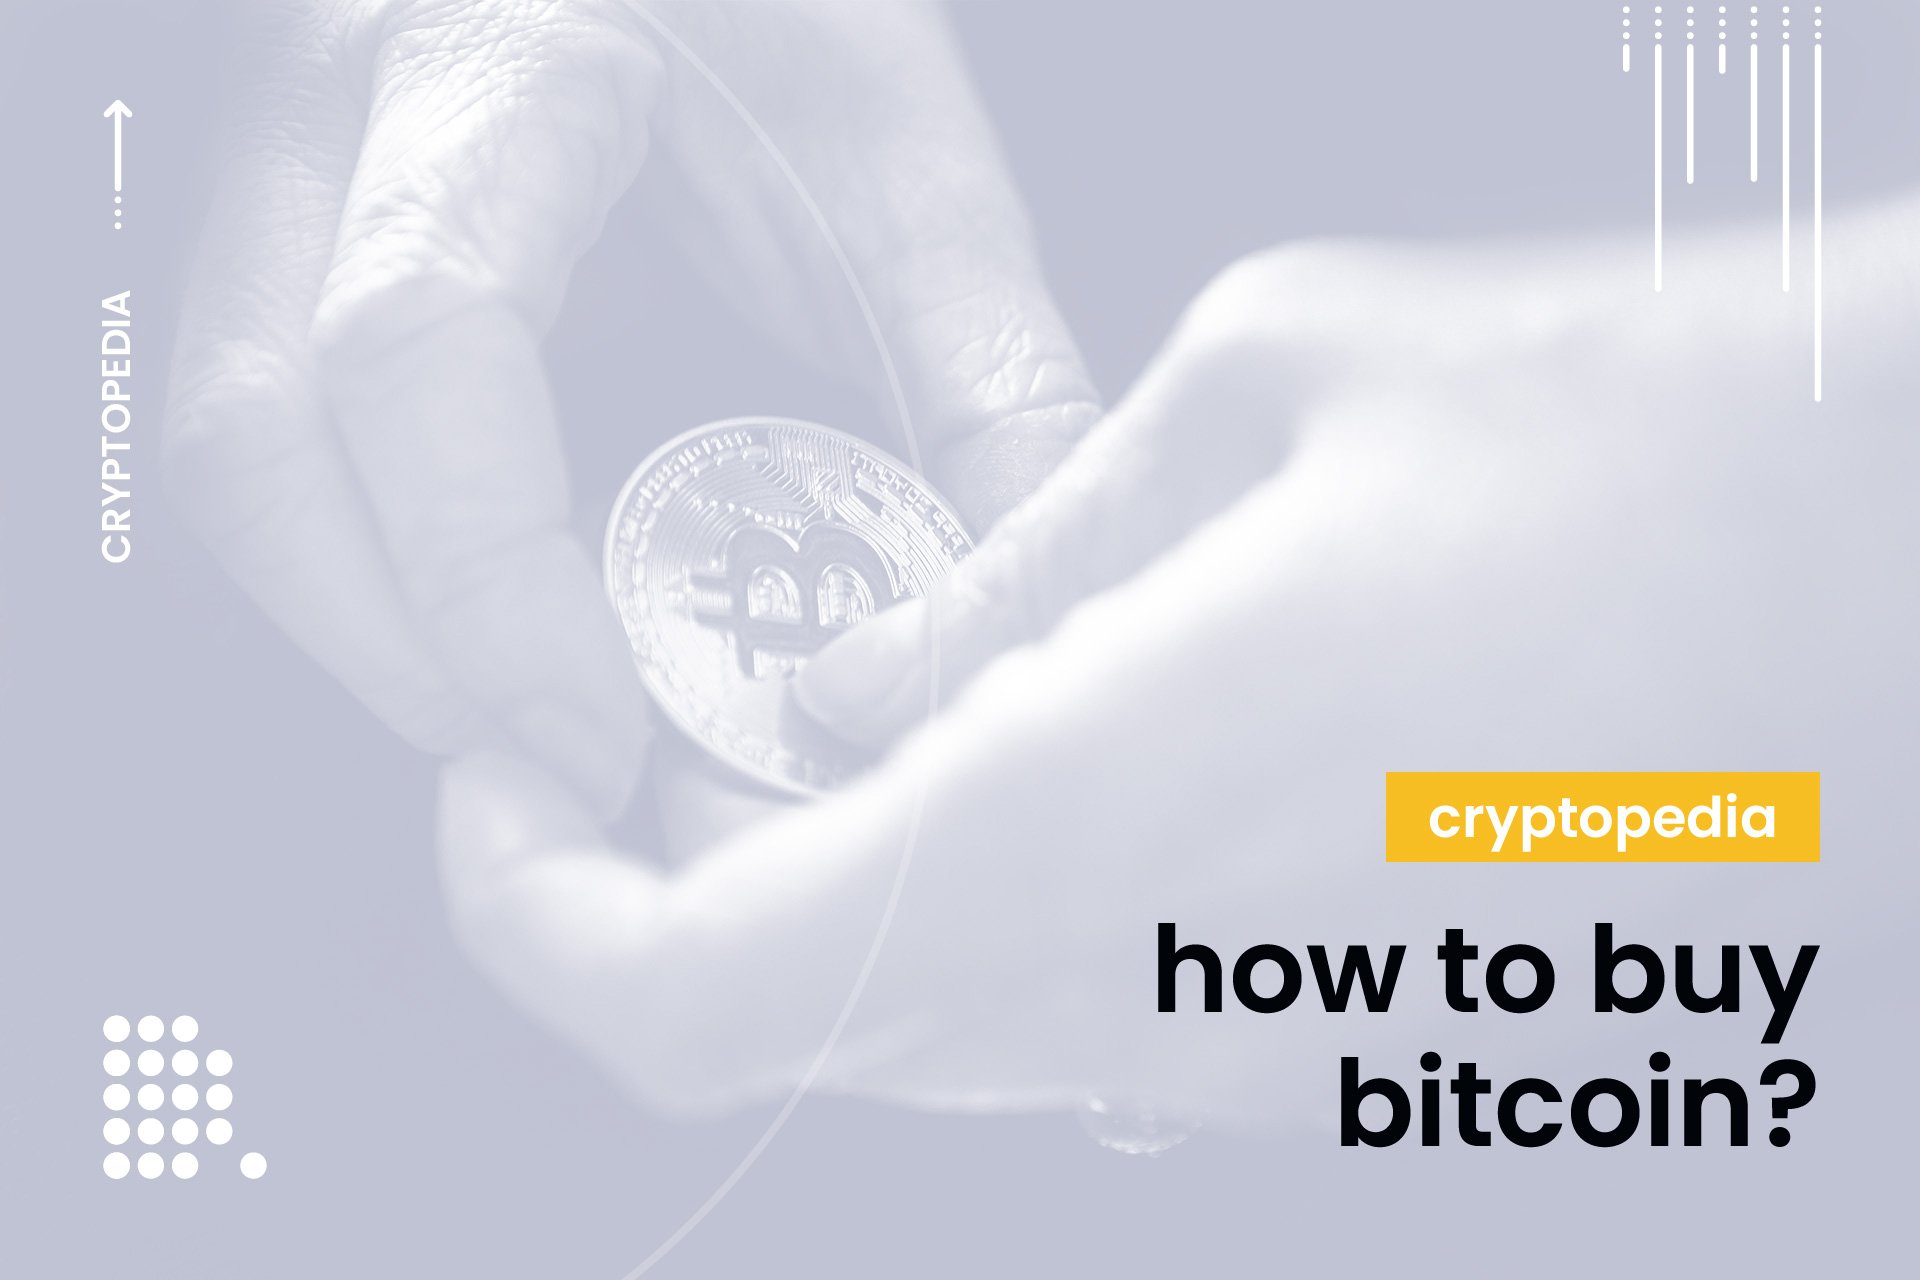 How to buy bitcoin?